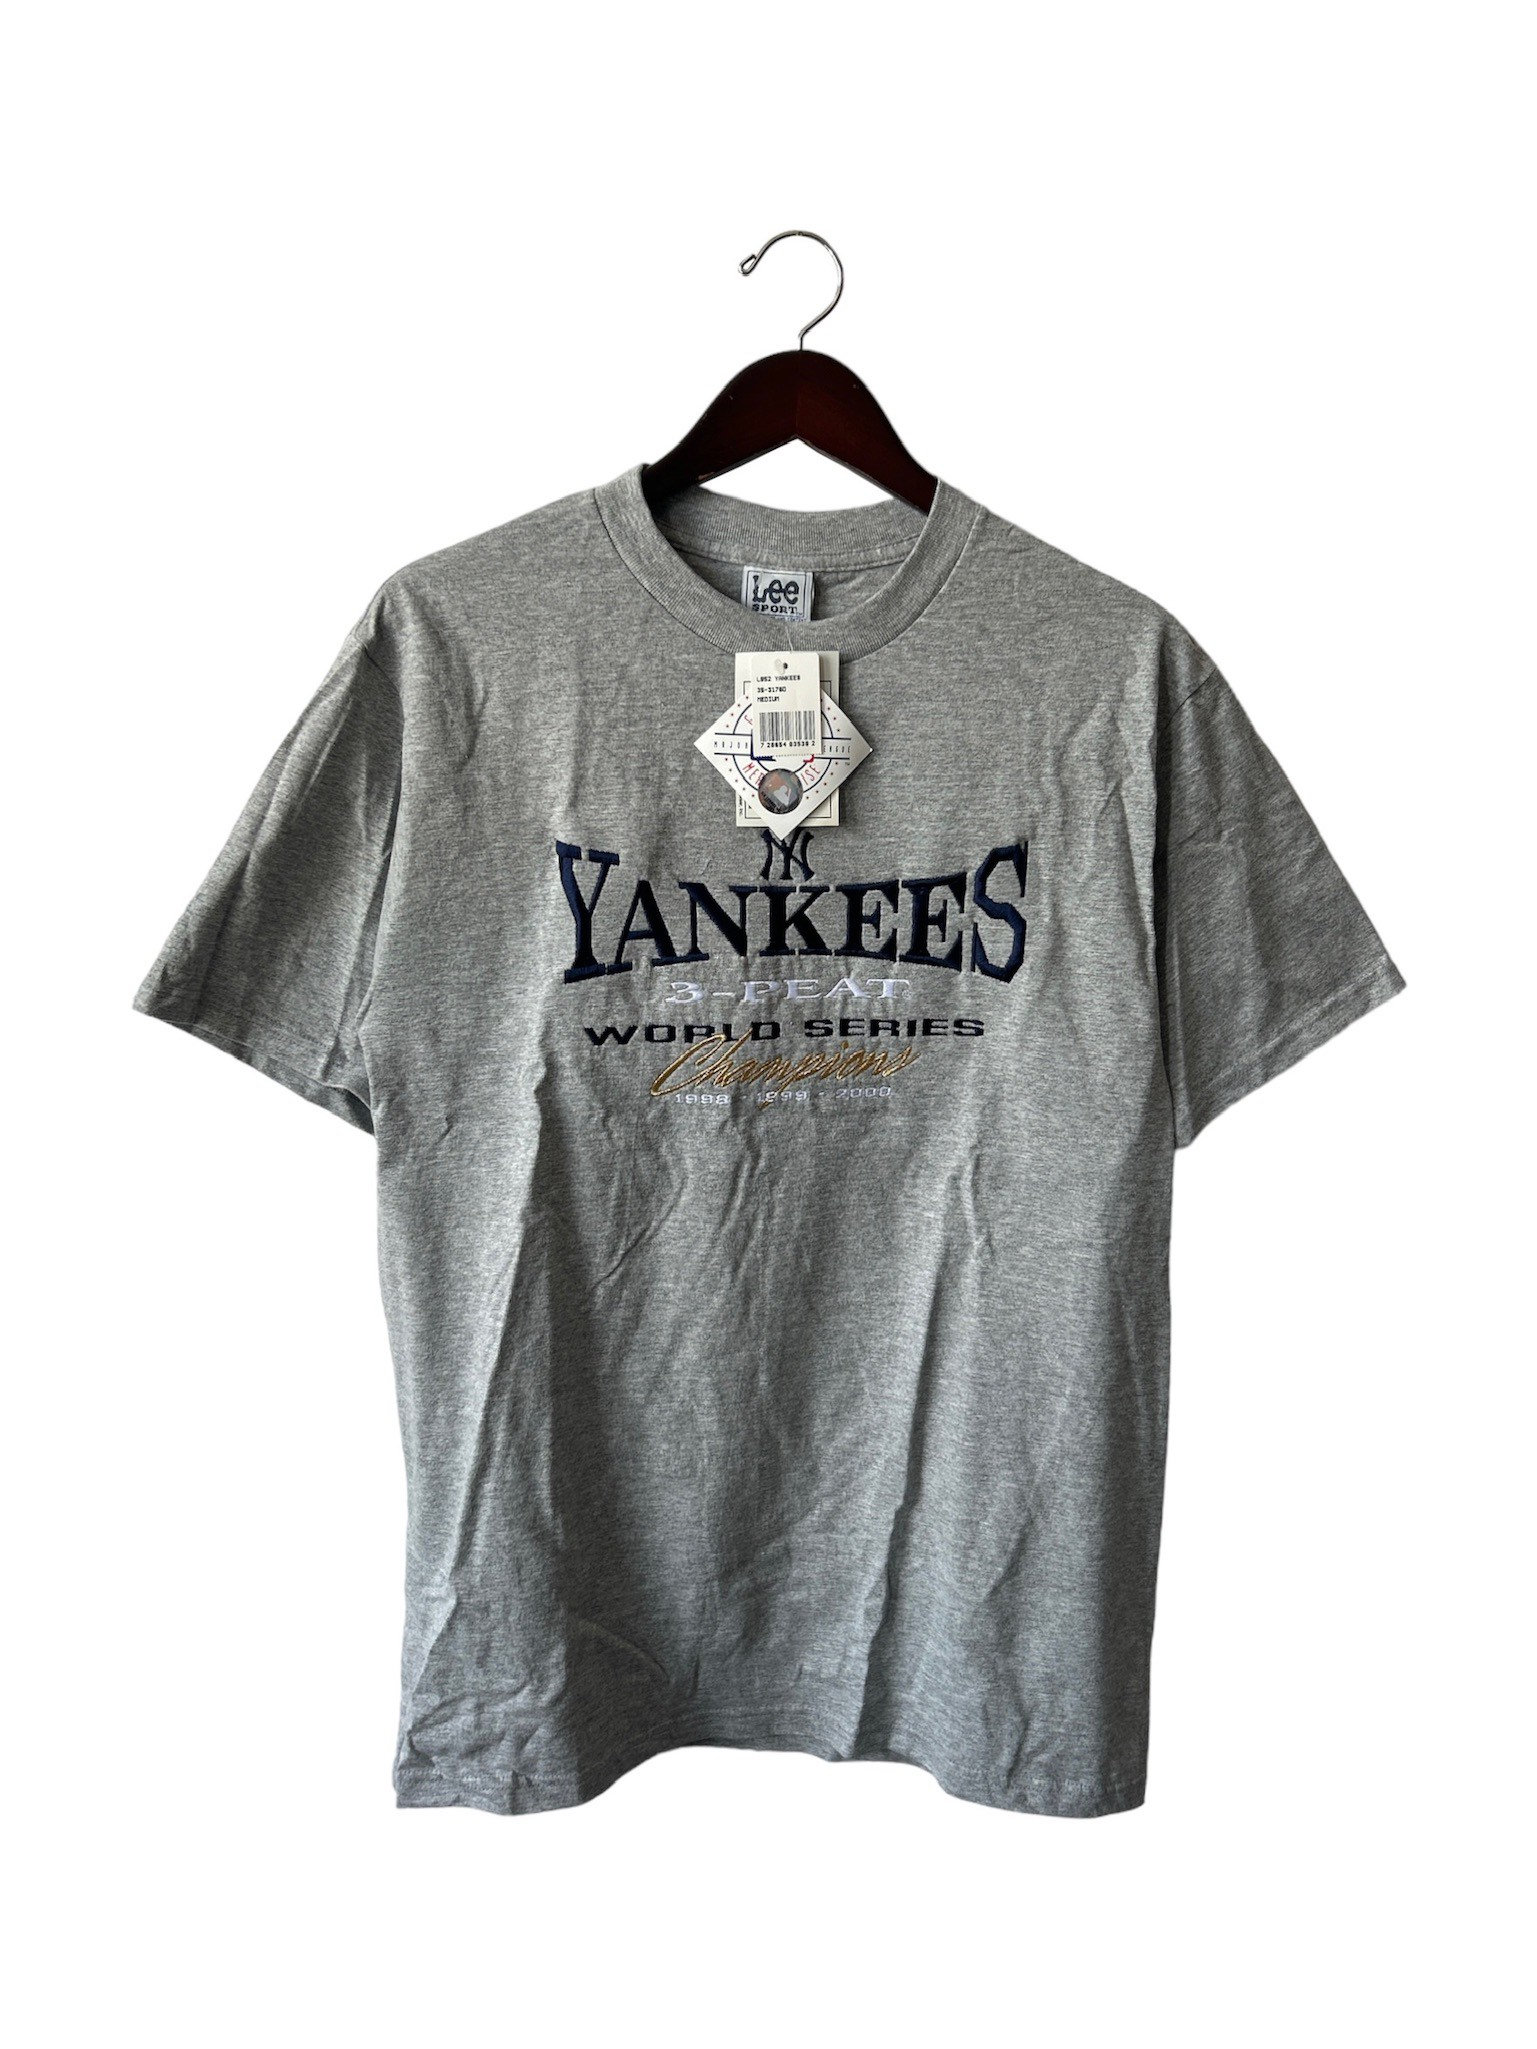 Vintage New York Yankees T-shirt Mens Size Medium Deadstock 